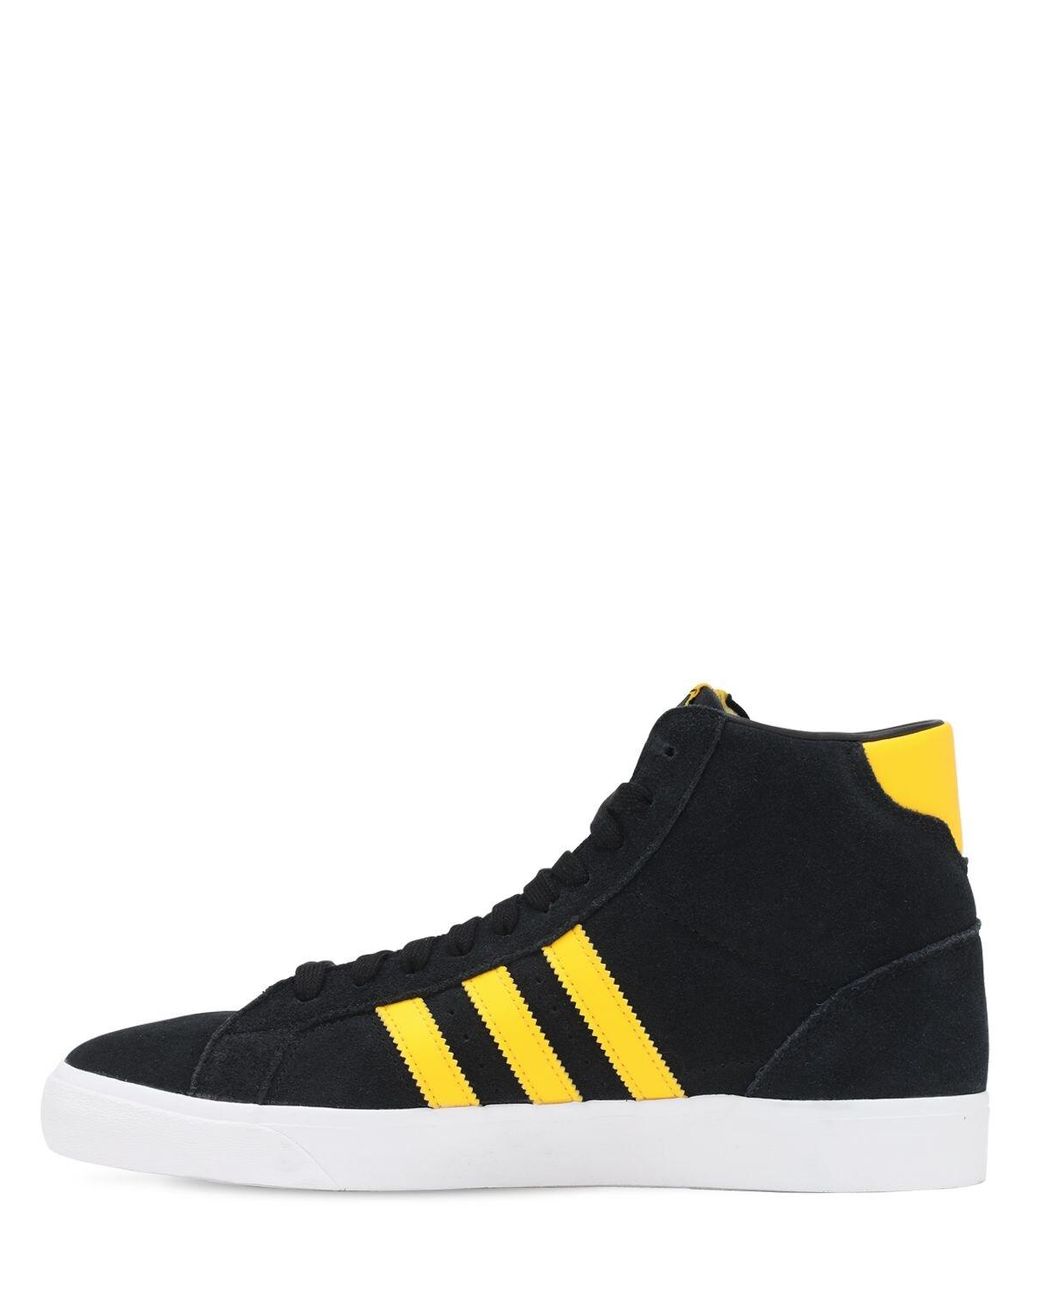 adidas Originals Suede /yellow Basket Profi Sneakers in Black,Gold (Black)  for Men - Lyst